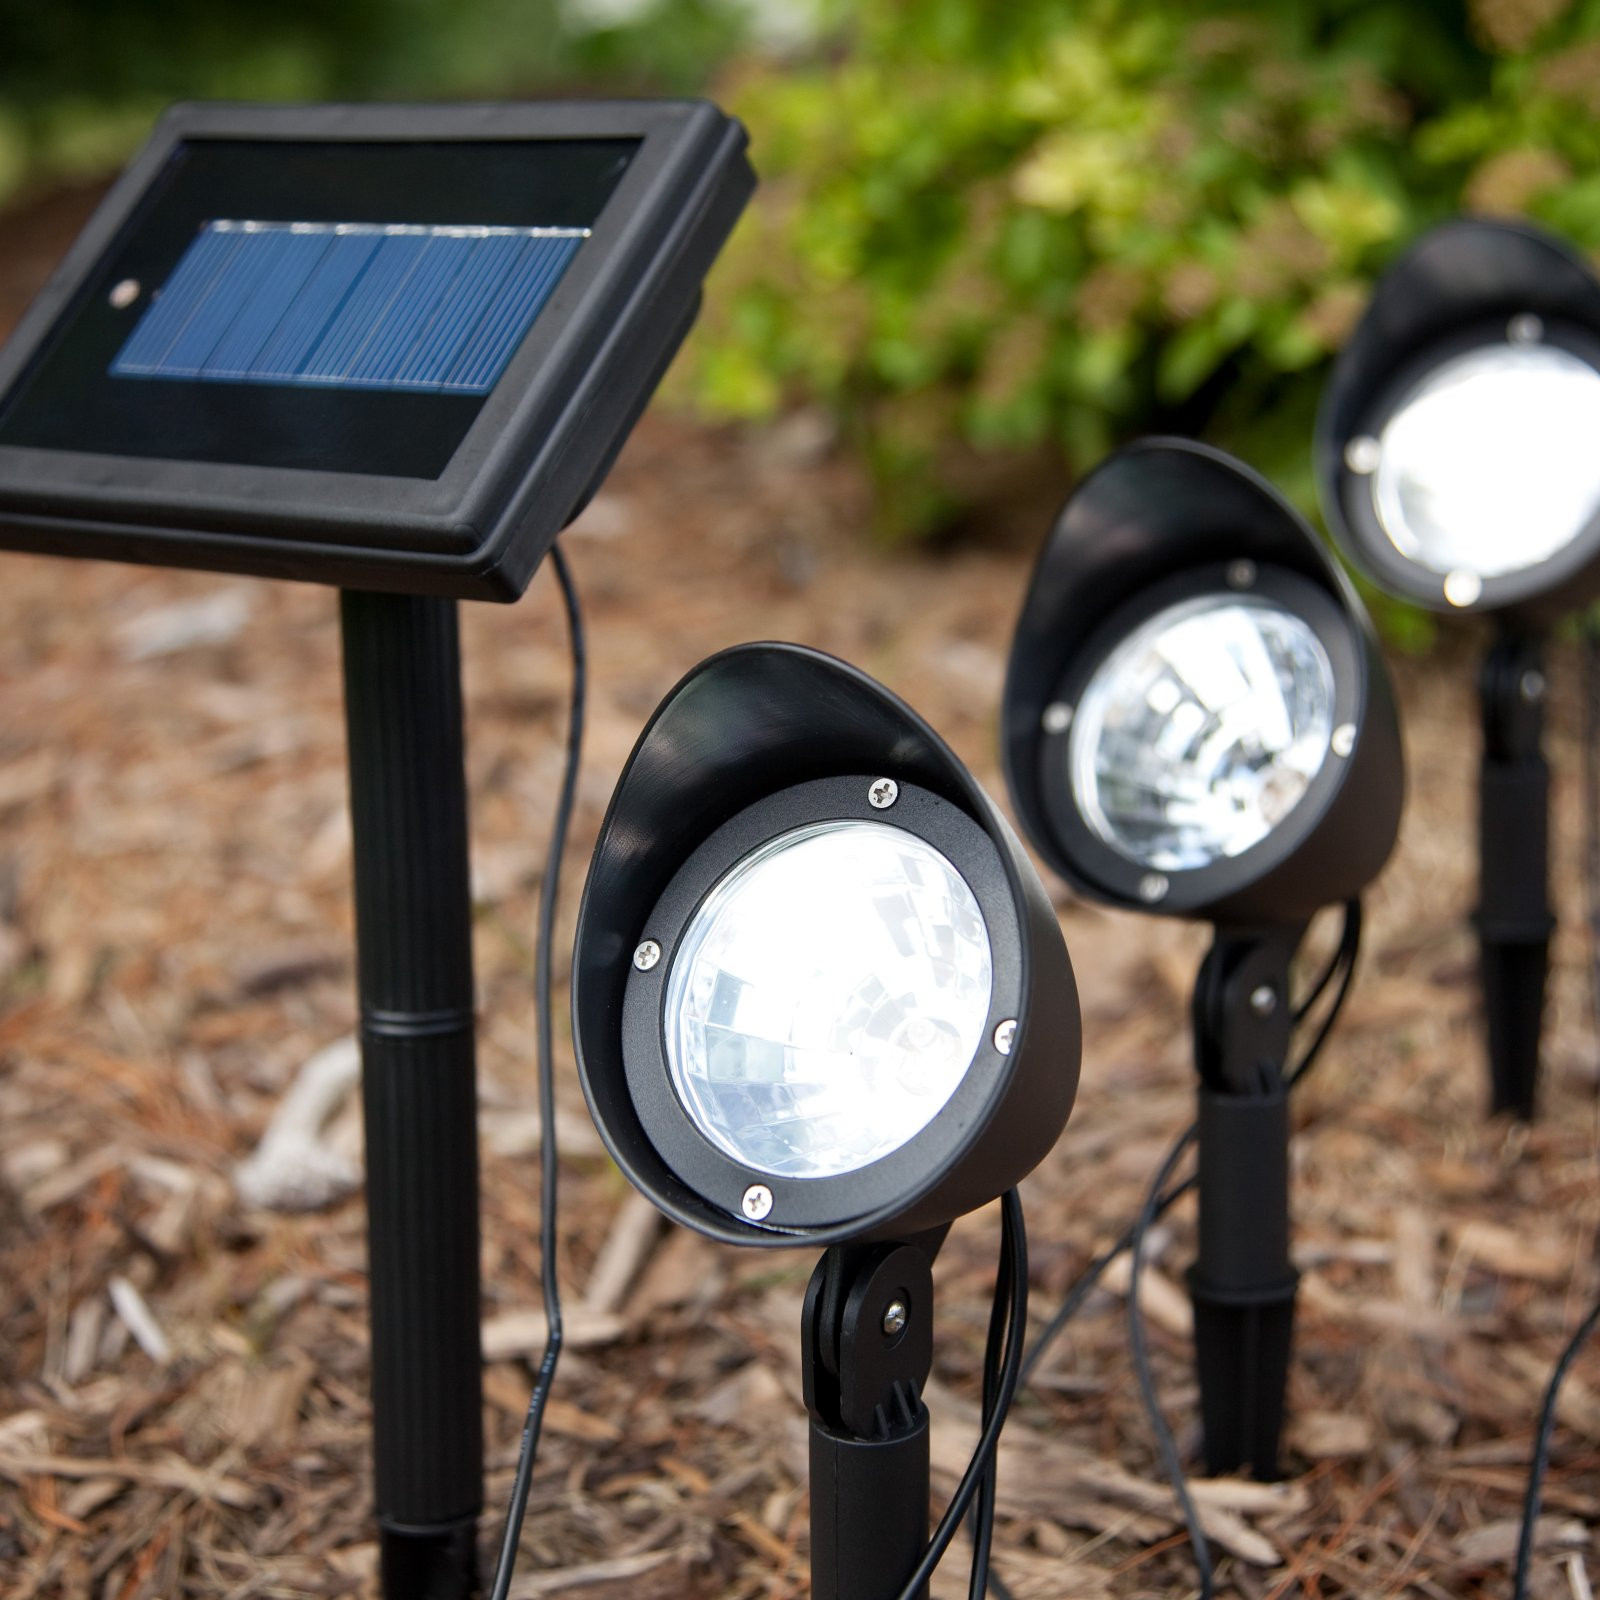 Best ideas about Solar Landscape Spotlights
. Save or Pin Outdoor motion solar spotlights WinLights Now.